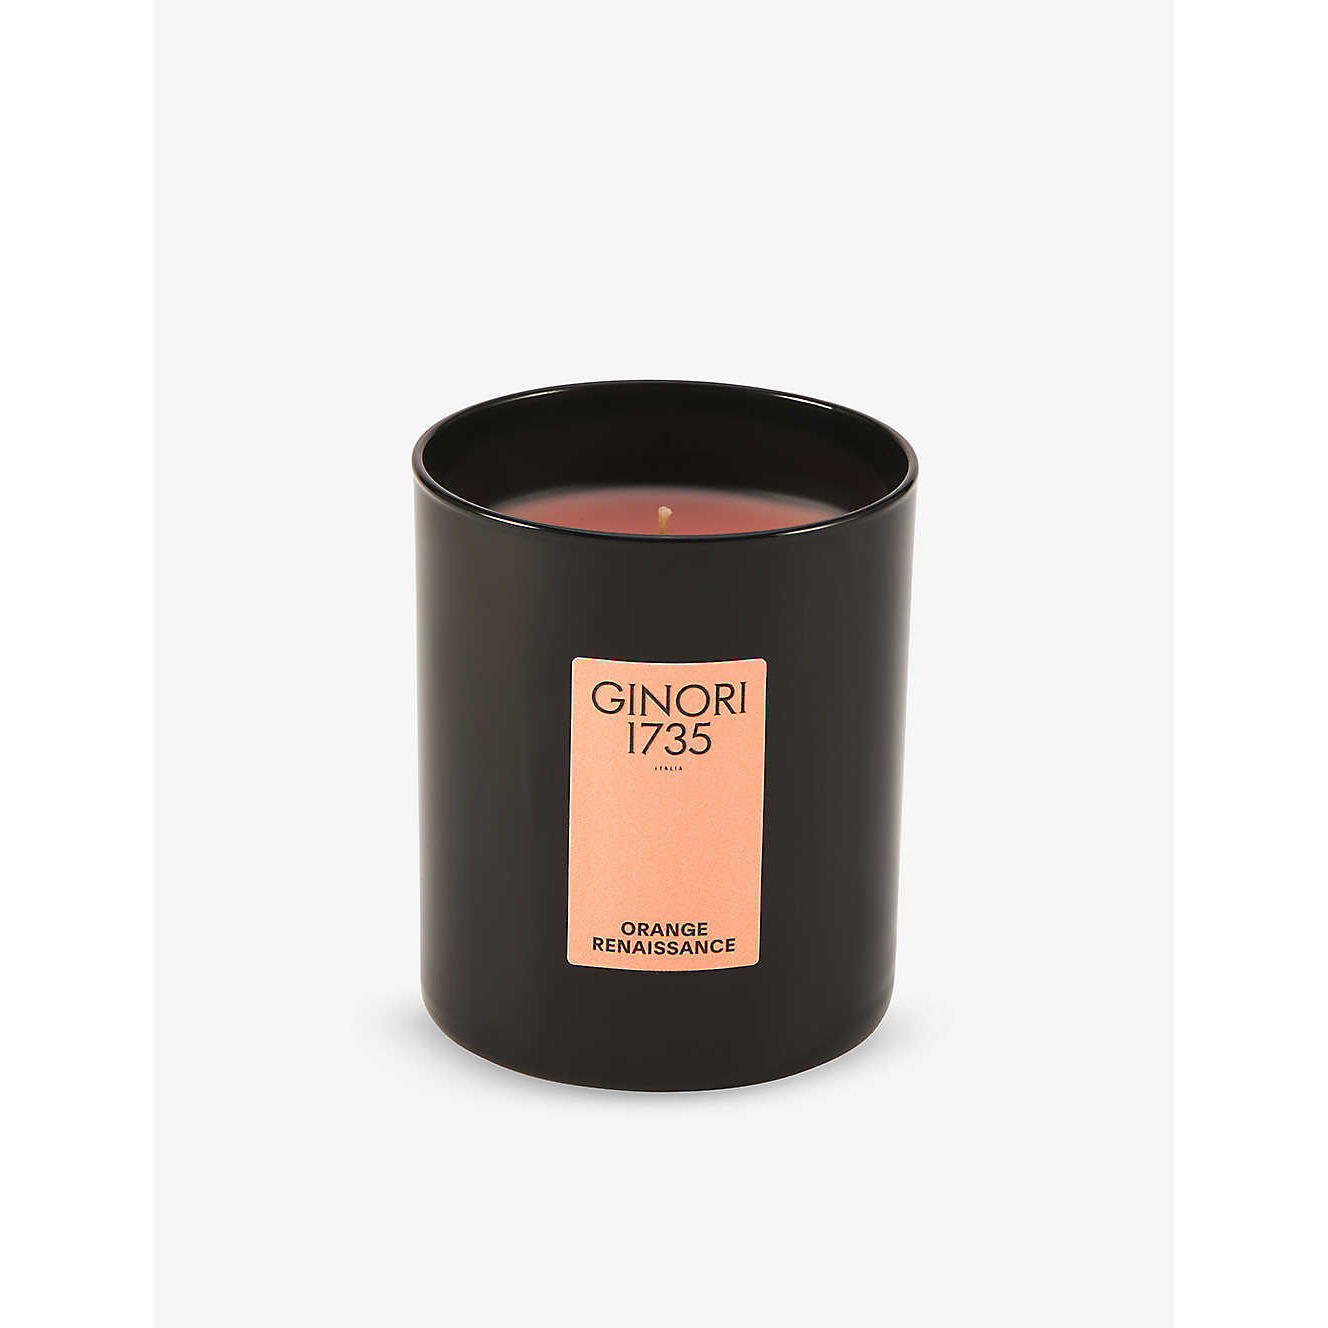 Il Seguace Orange Renaissance scented candle refill 190g - image 1